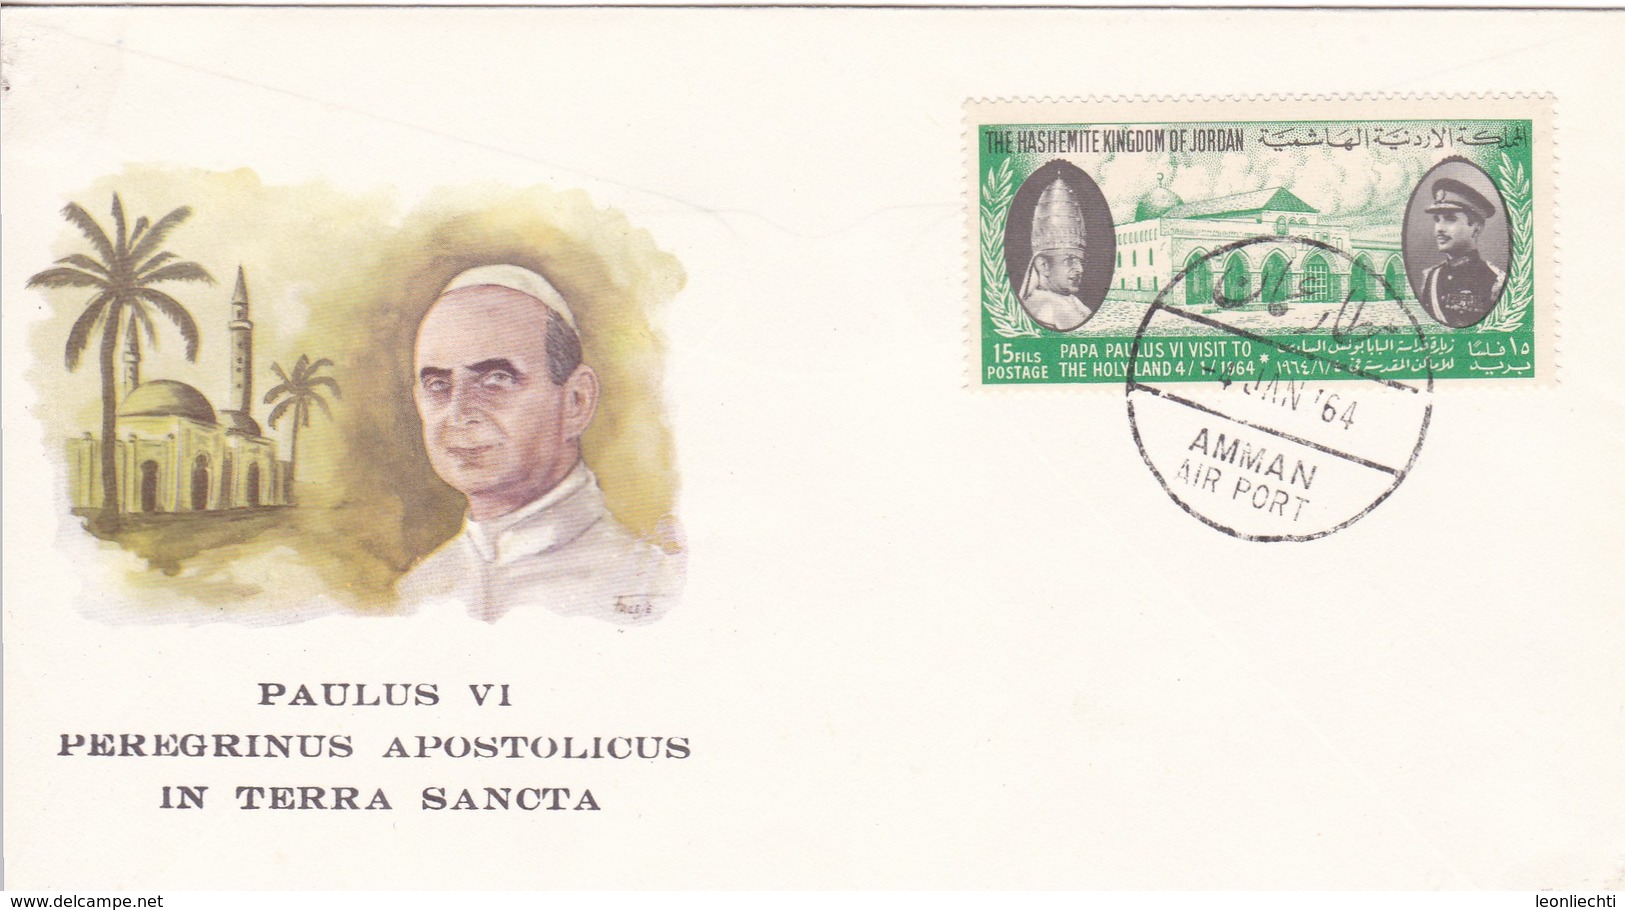 Paulus VI PEREGRINUS APOSTOLICUS IN TERRA SANCTA, Stempel: 4.JAN.1964. AMMAN AIR PORT - Jordanie